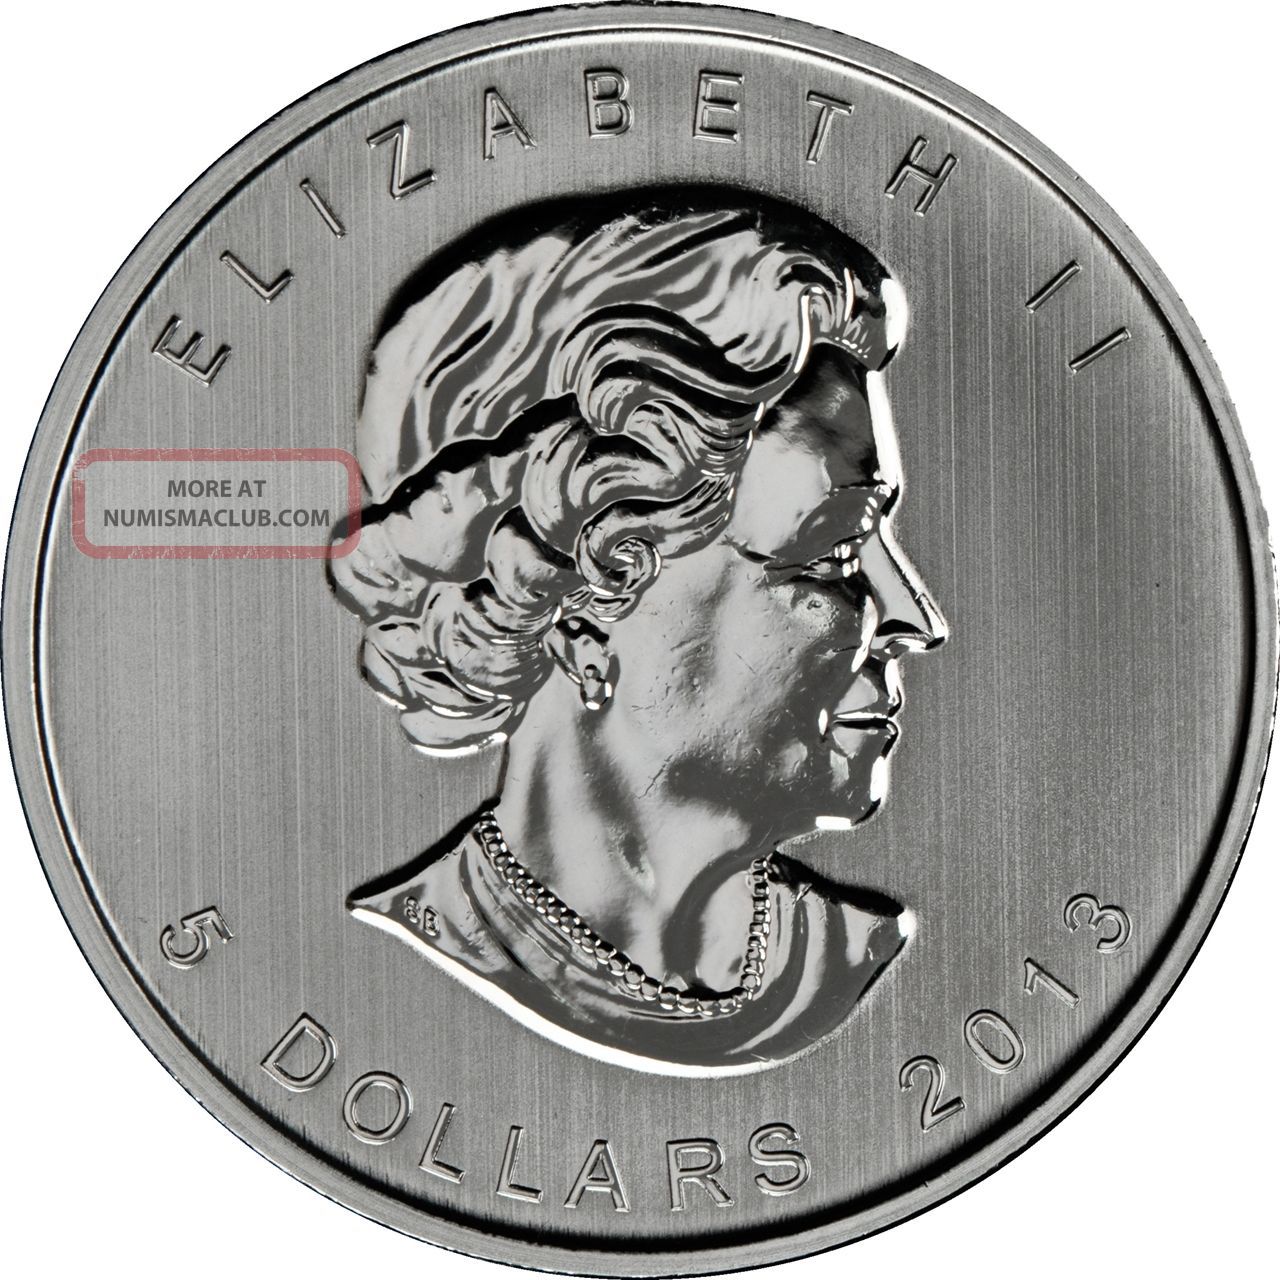 2020 1 oz canadian silver maple leaf coin